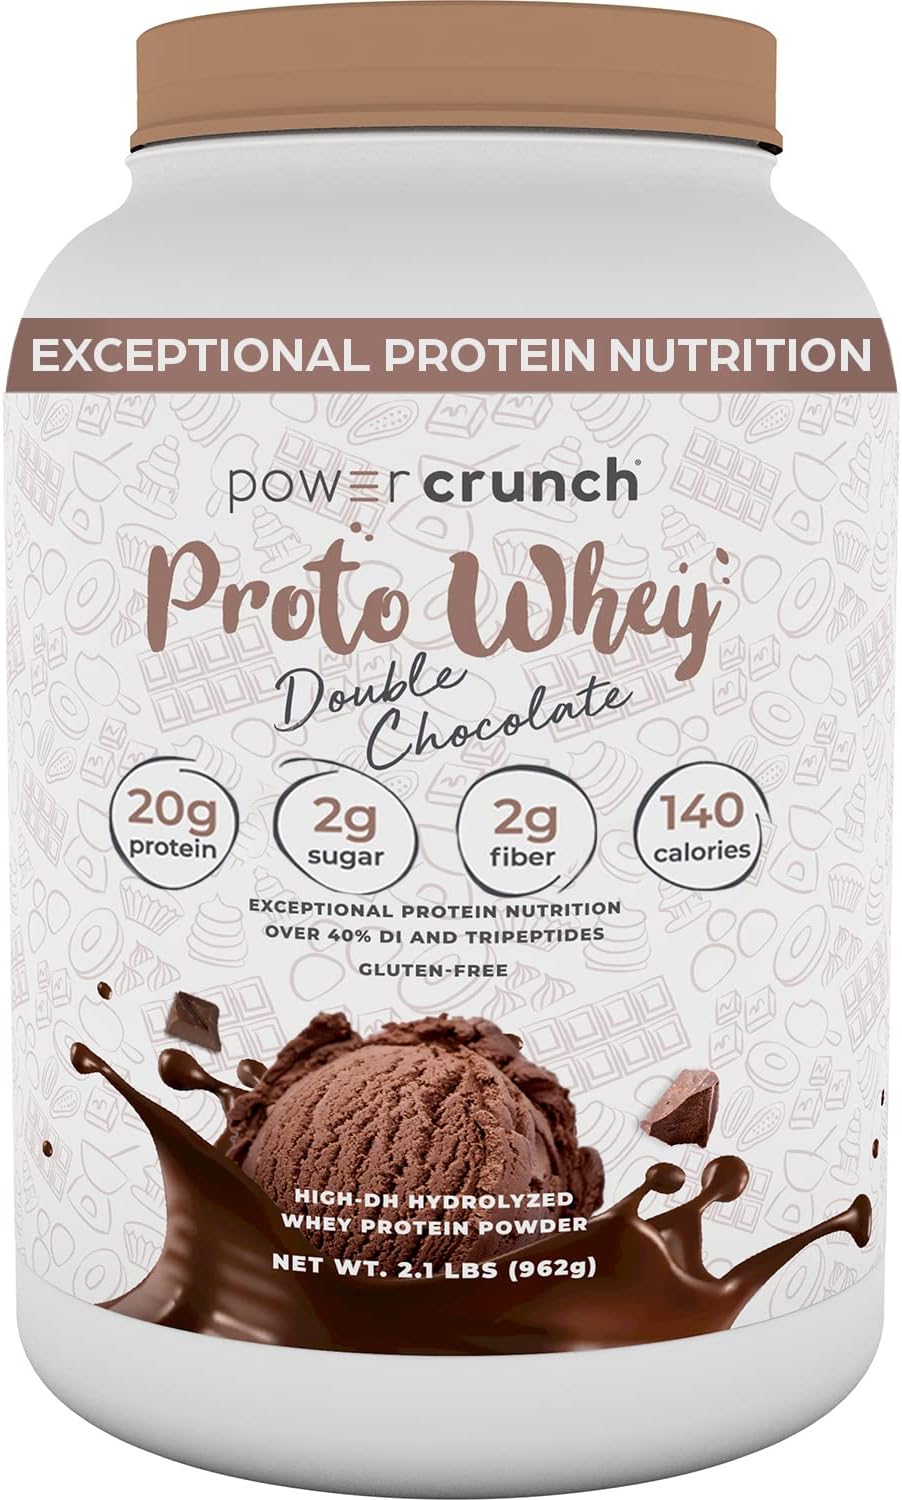 Power Crunch Proto Whey Double Chocolate Protein Powder, 20g Protein,